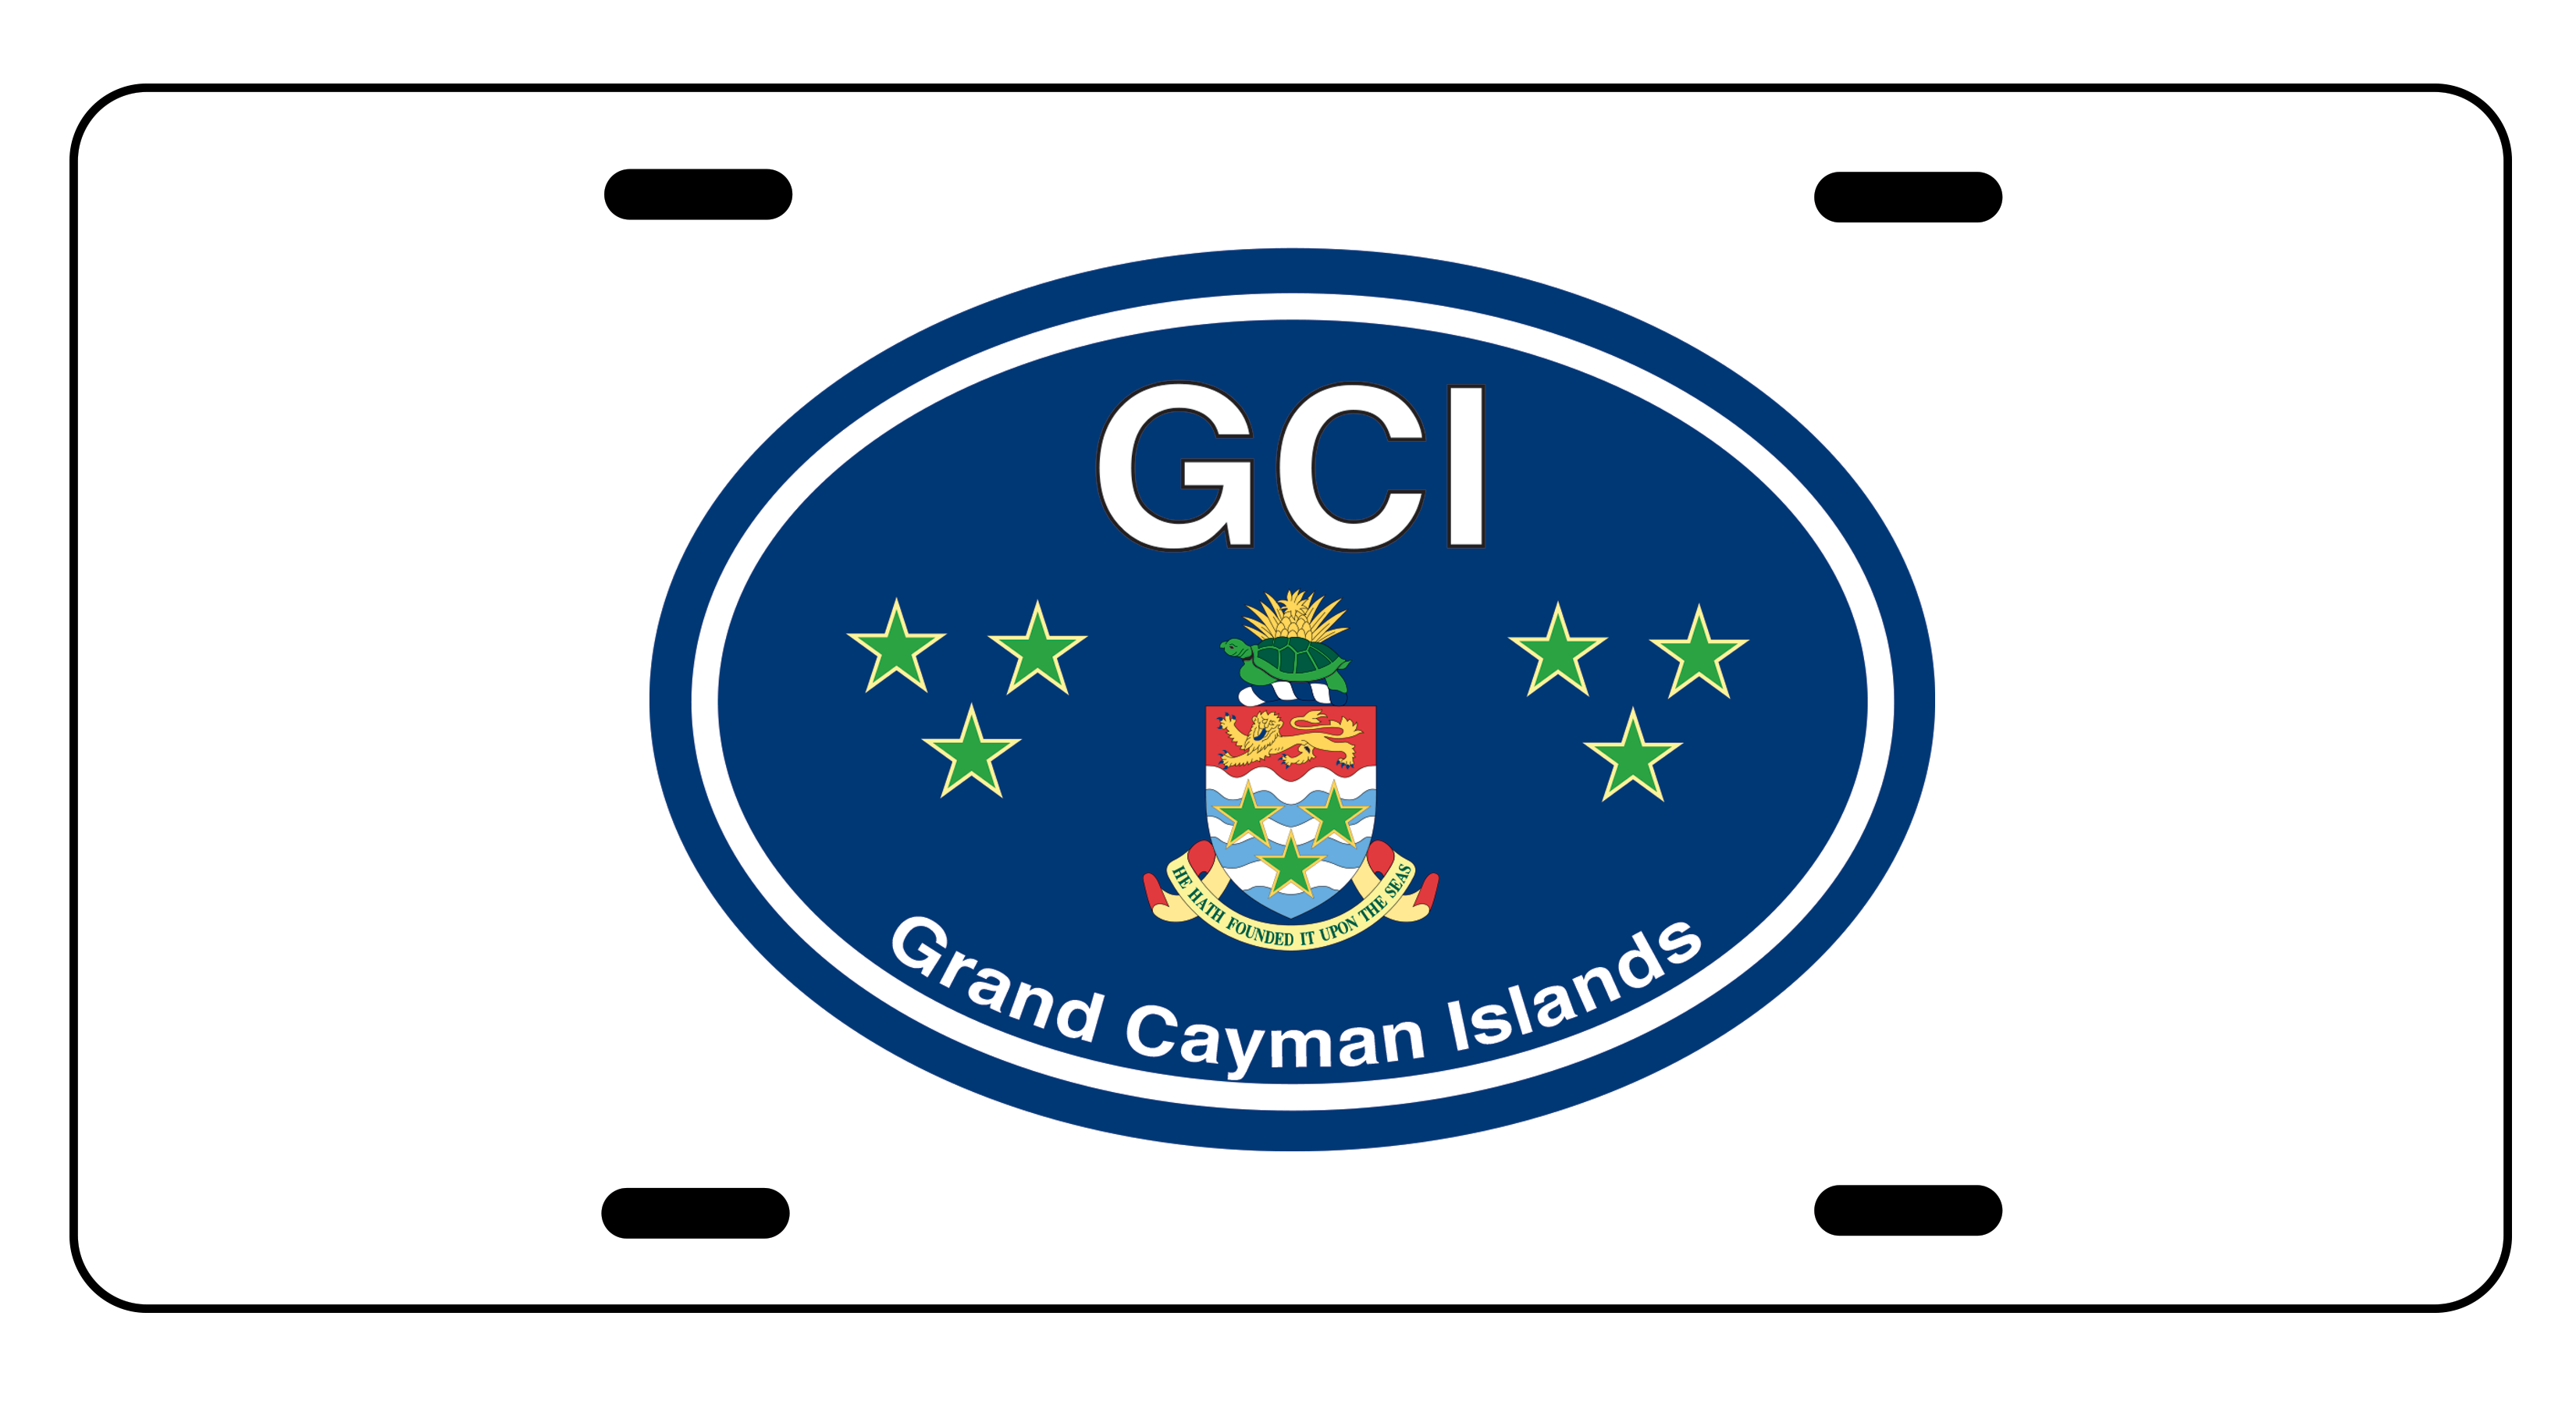 Grand Cayman Color Logo License Plates - My Destination Location